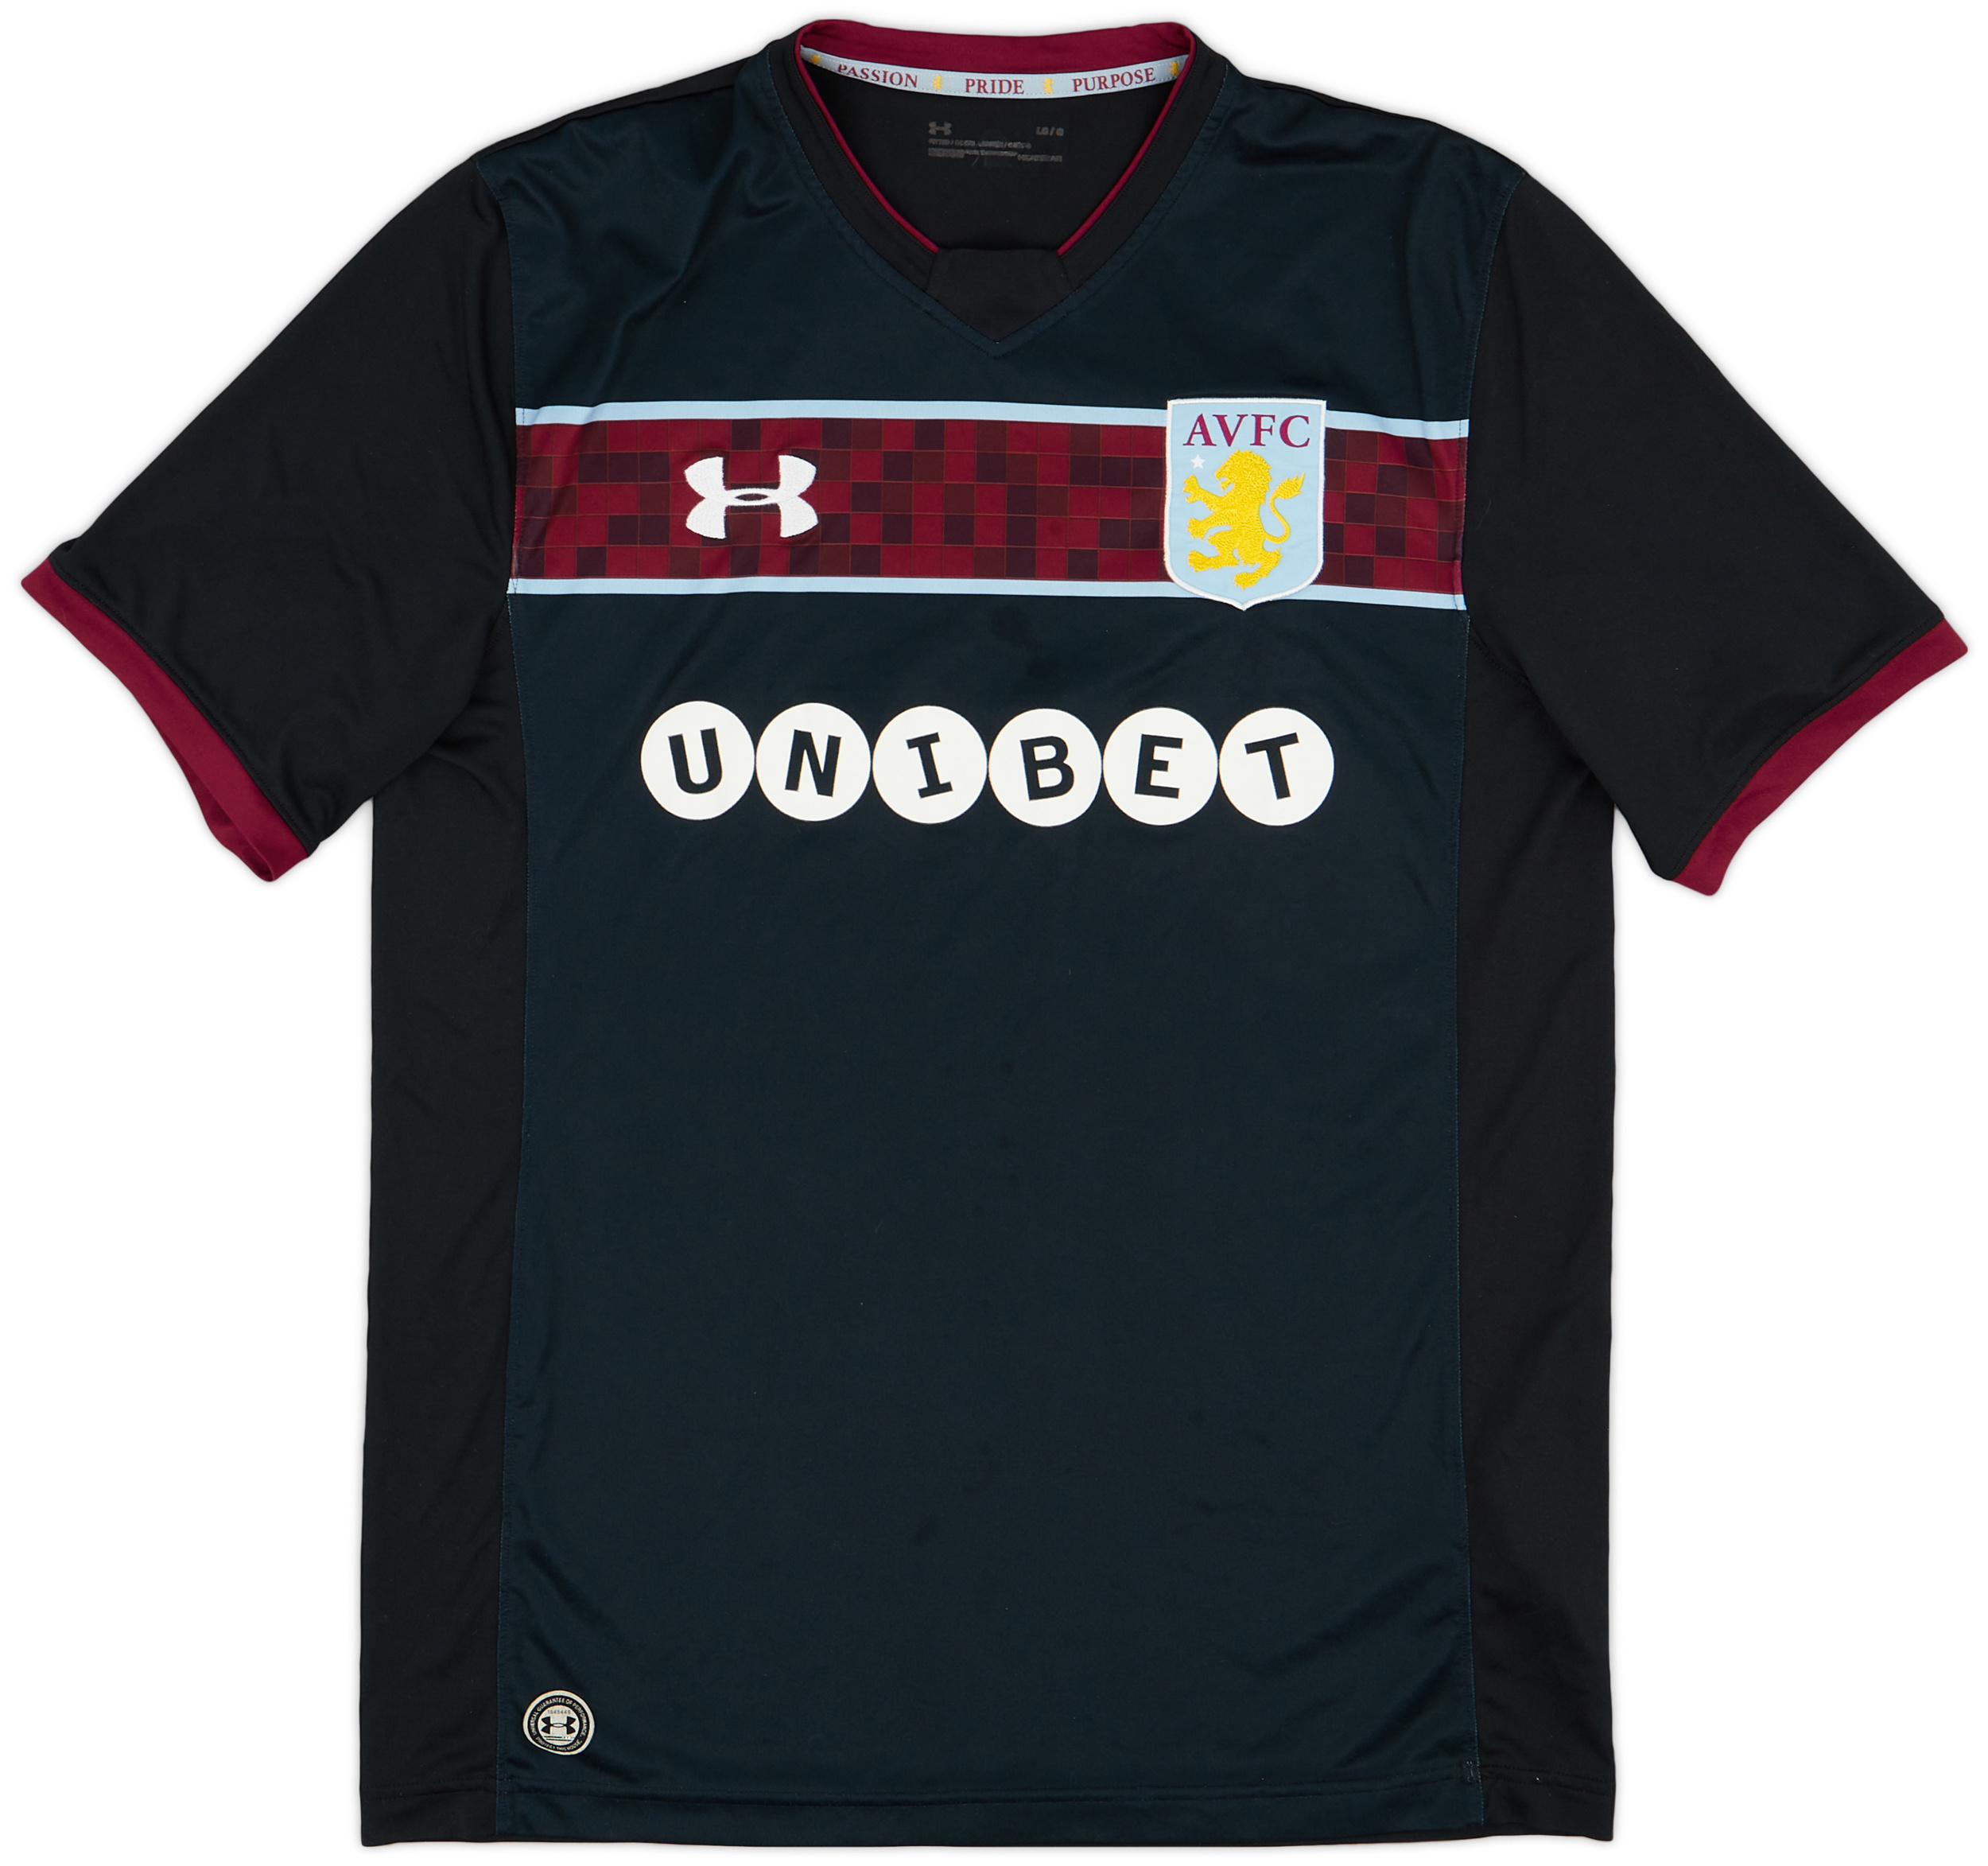 2017-18 Aston Villa Away Shirt - 9/10 - ()